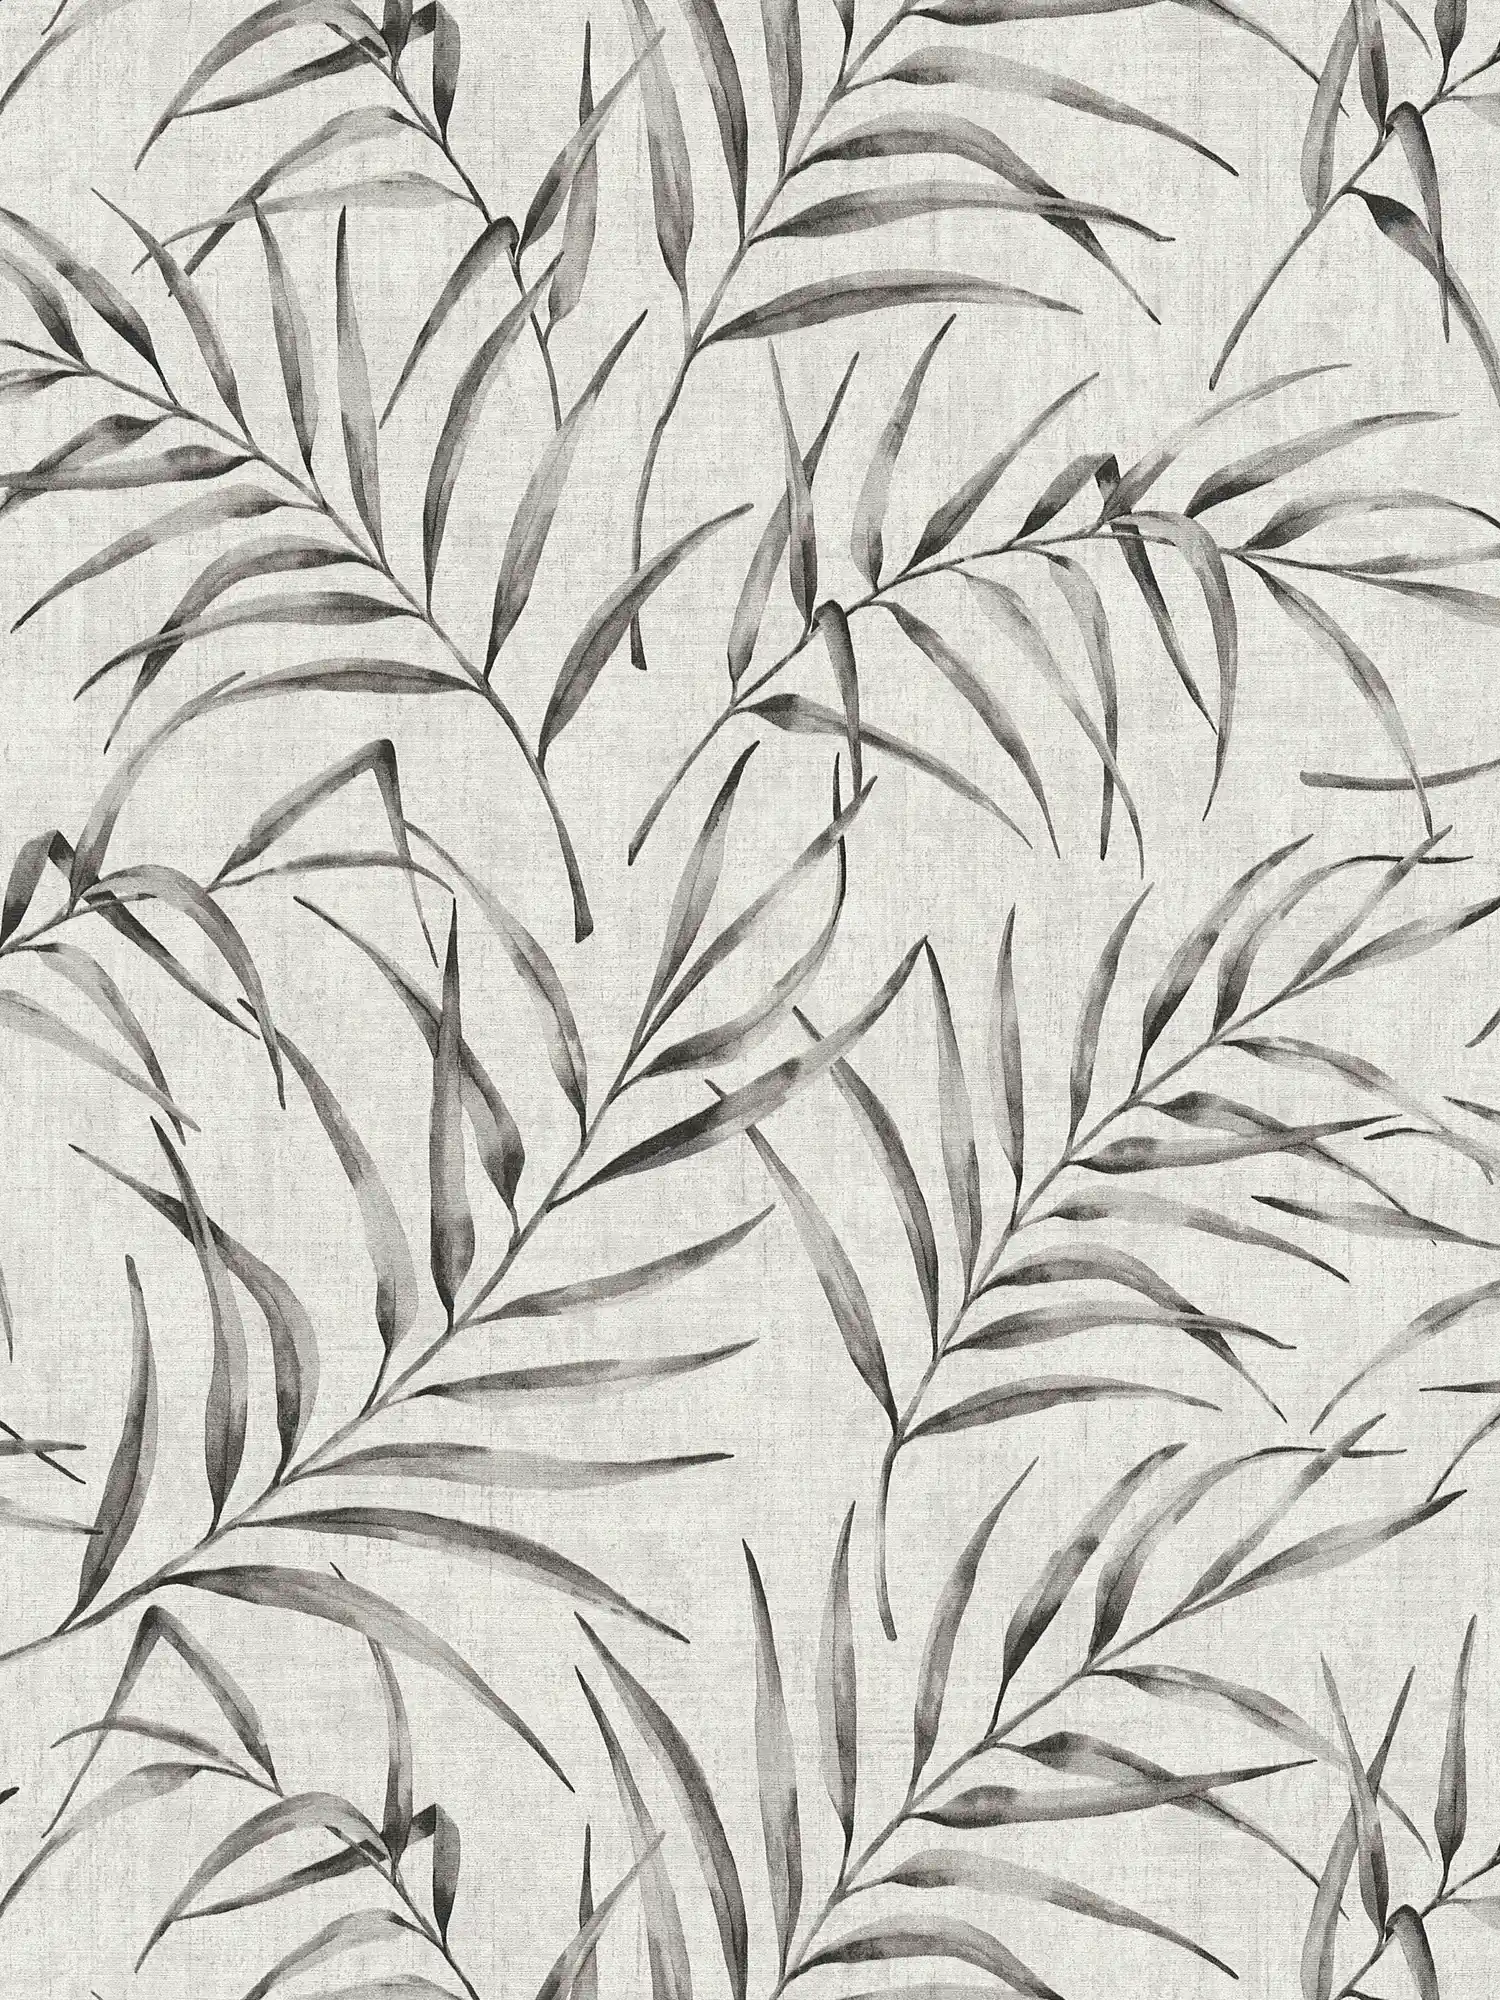 Vliestapete Blättermuster & Leinenoptik – Grau, Beige
